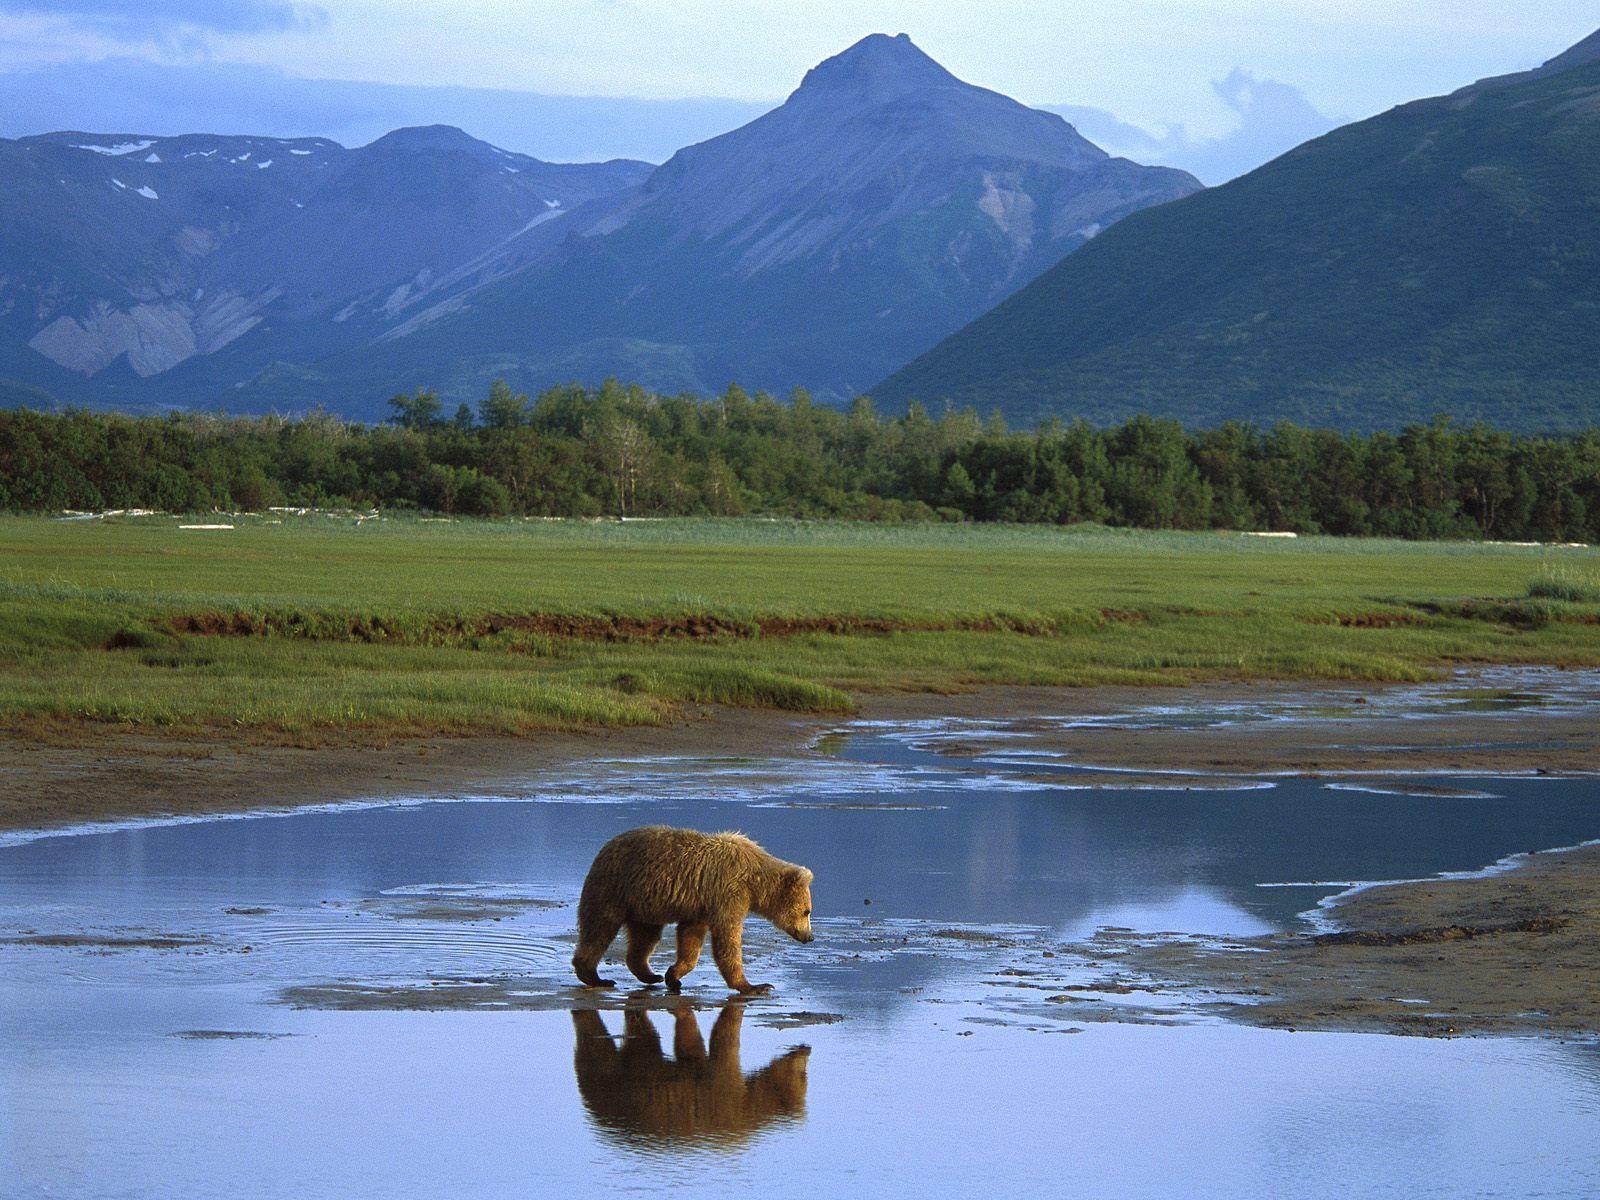 Katmai National Park, Alaska. This park on the Alaska Peninsula